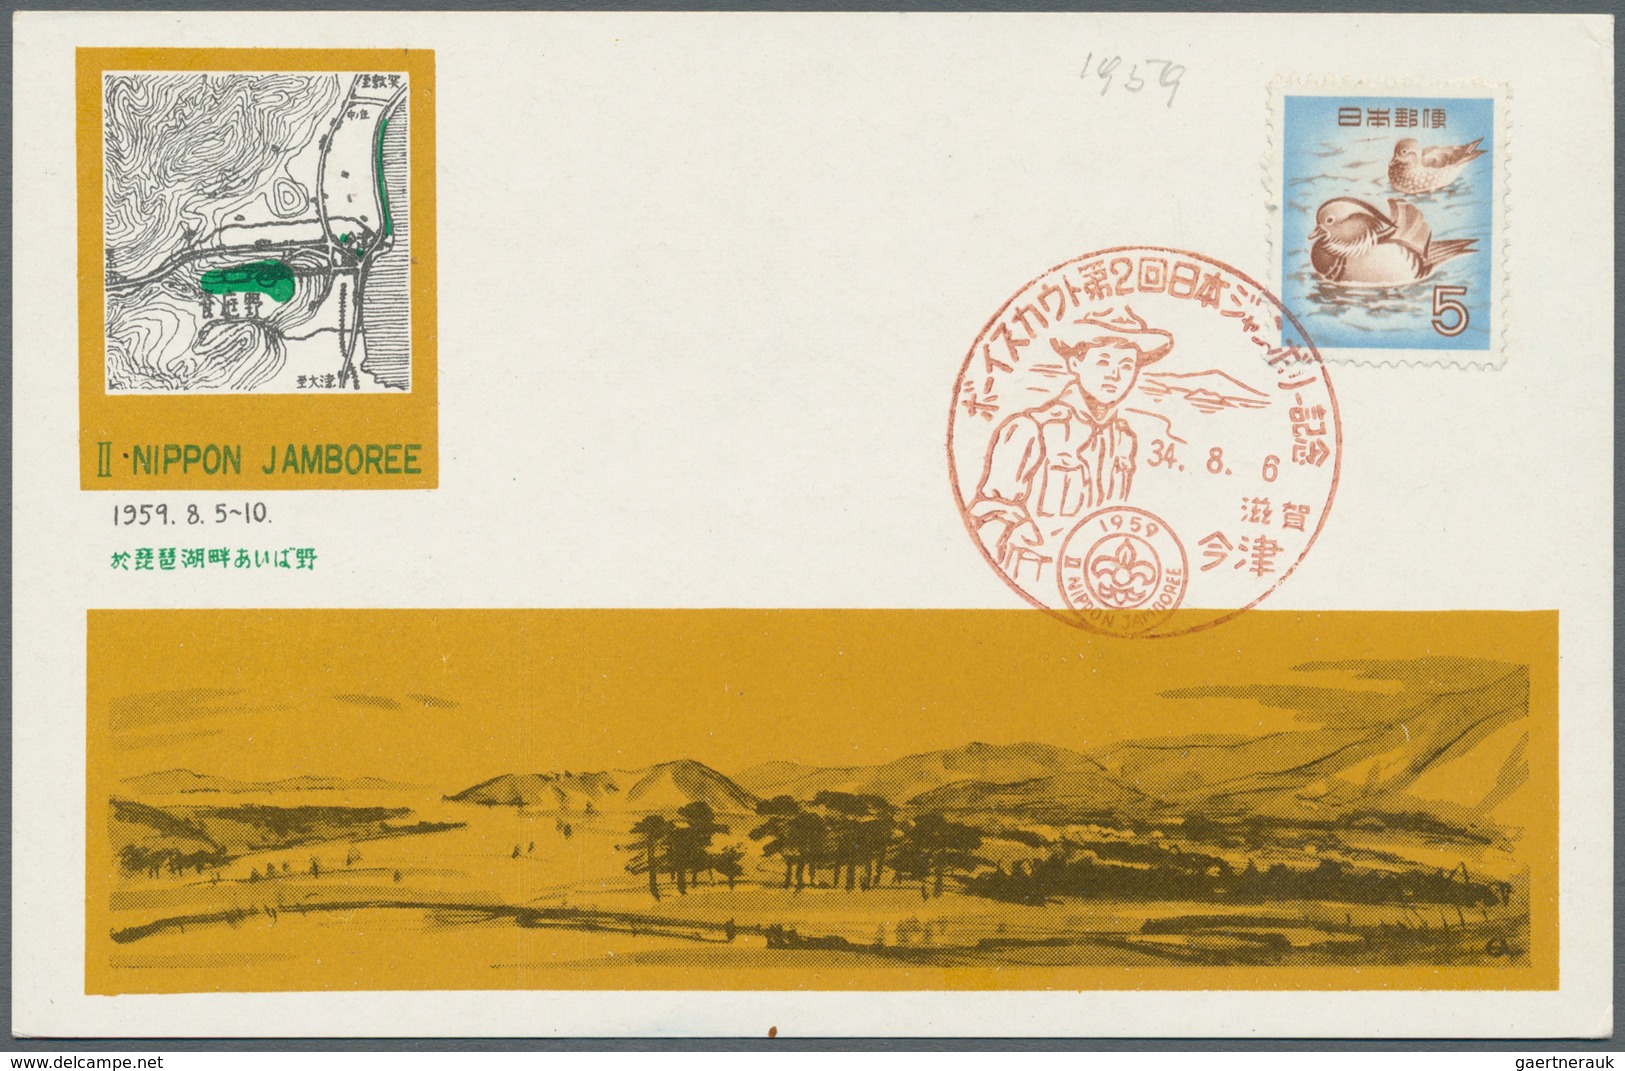 Japan: 1949/59, Japan, covers/FDC (9) mostly w. 1949 boy scout stamp inc. 1950.8.19 Shinjuku commemo